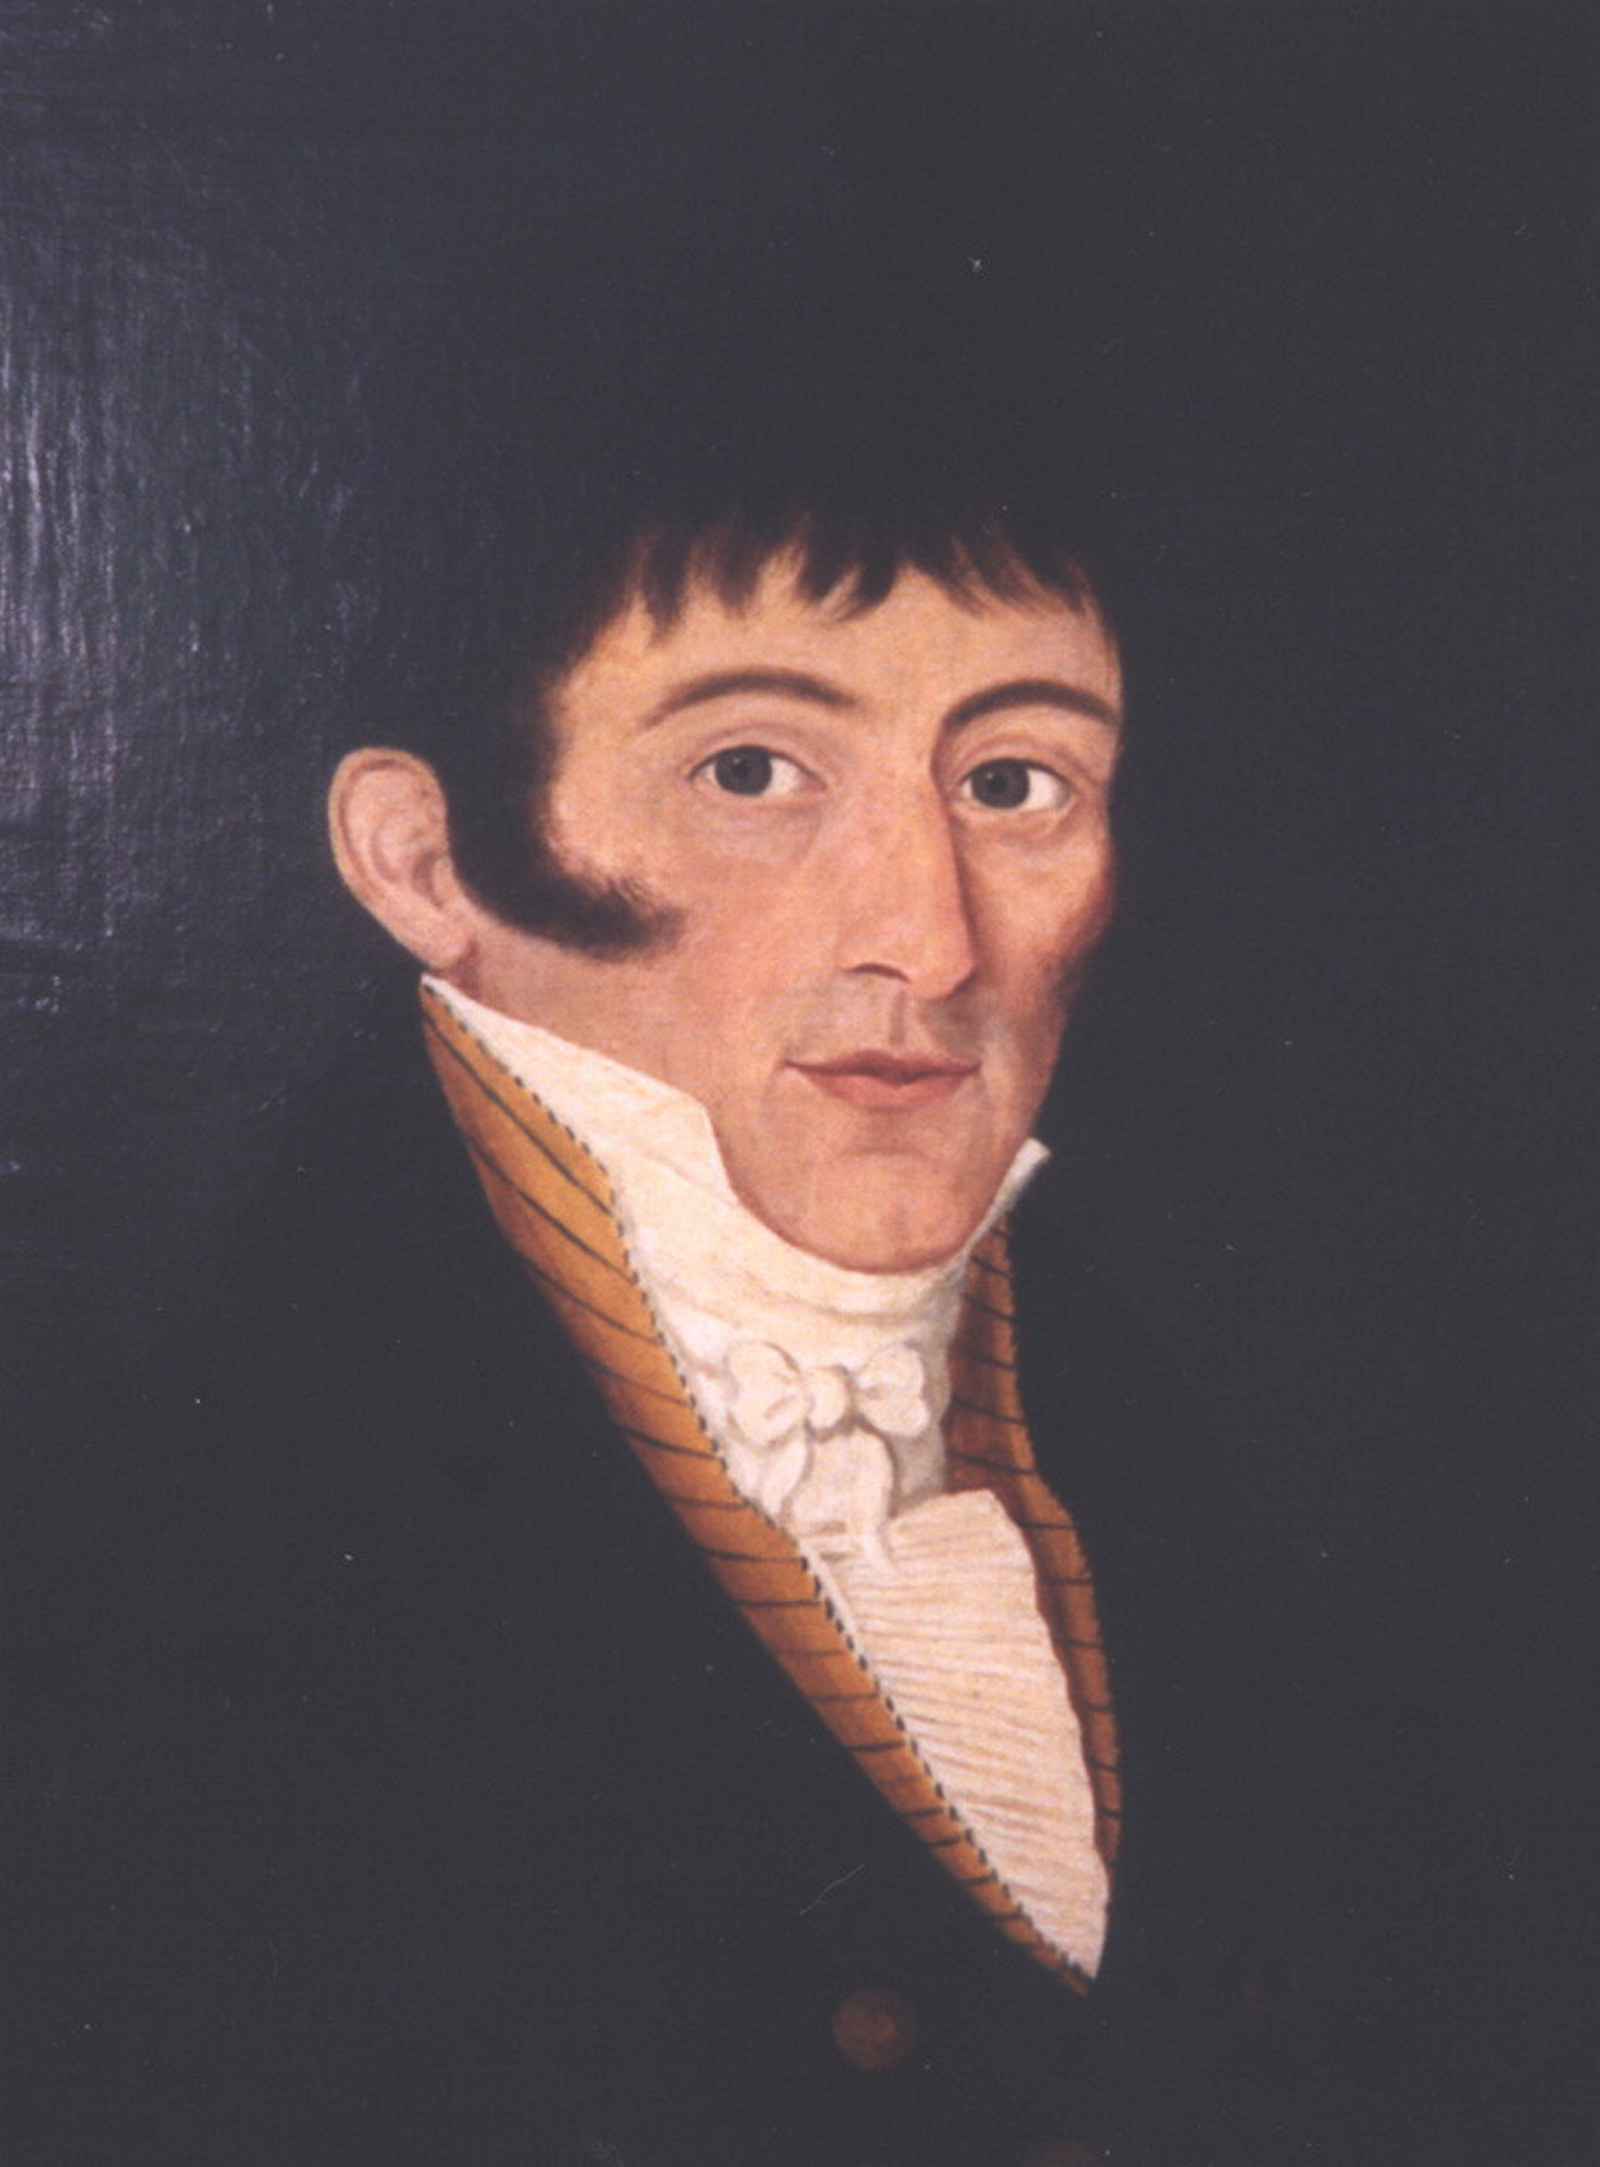 Oil painting of dark haired man against dark background.